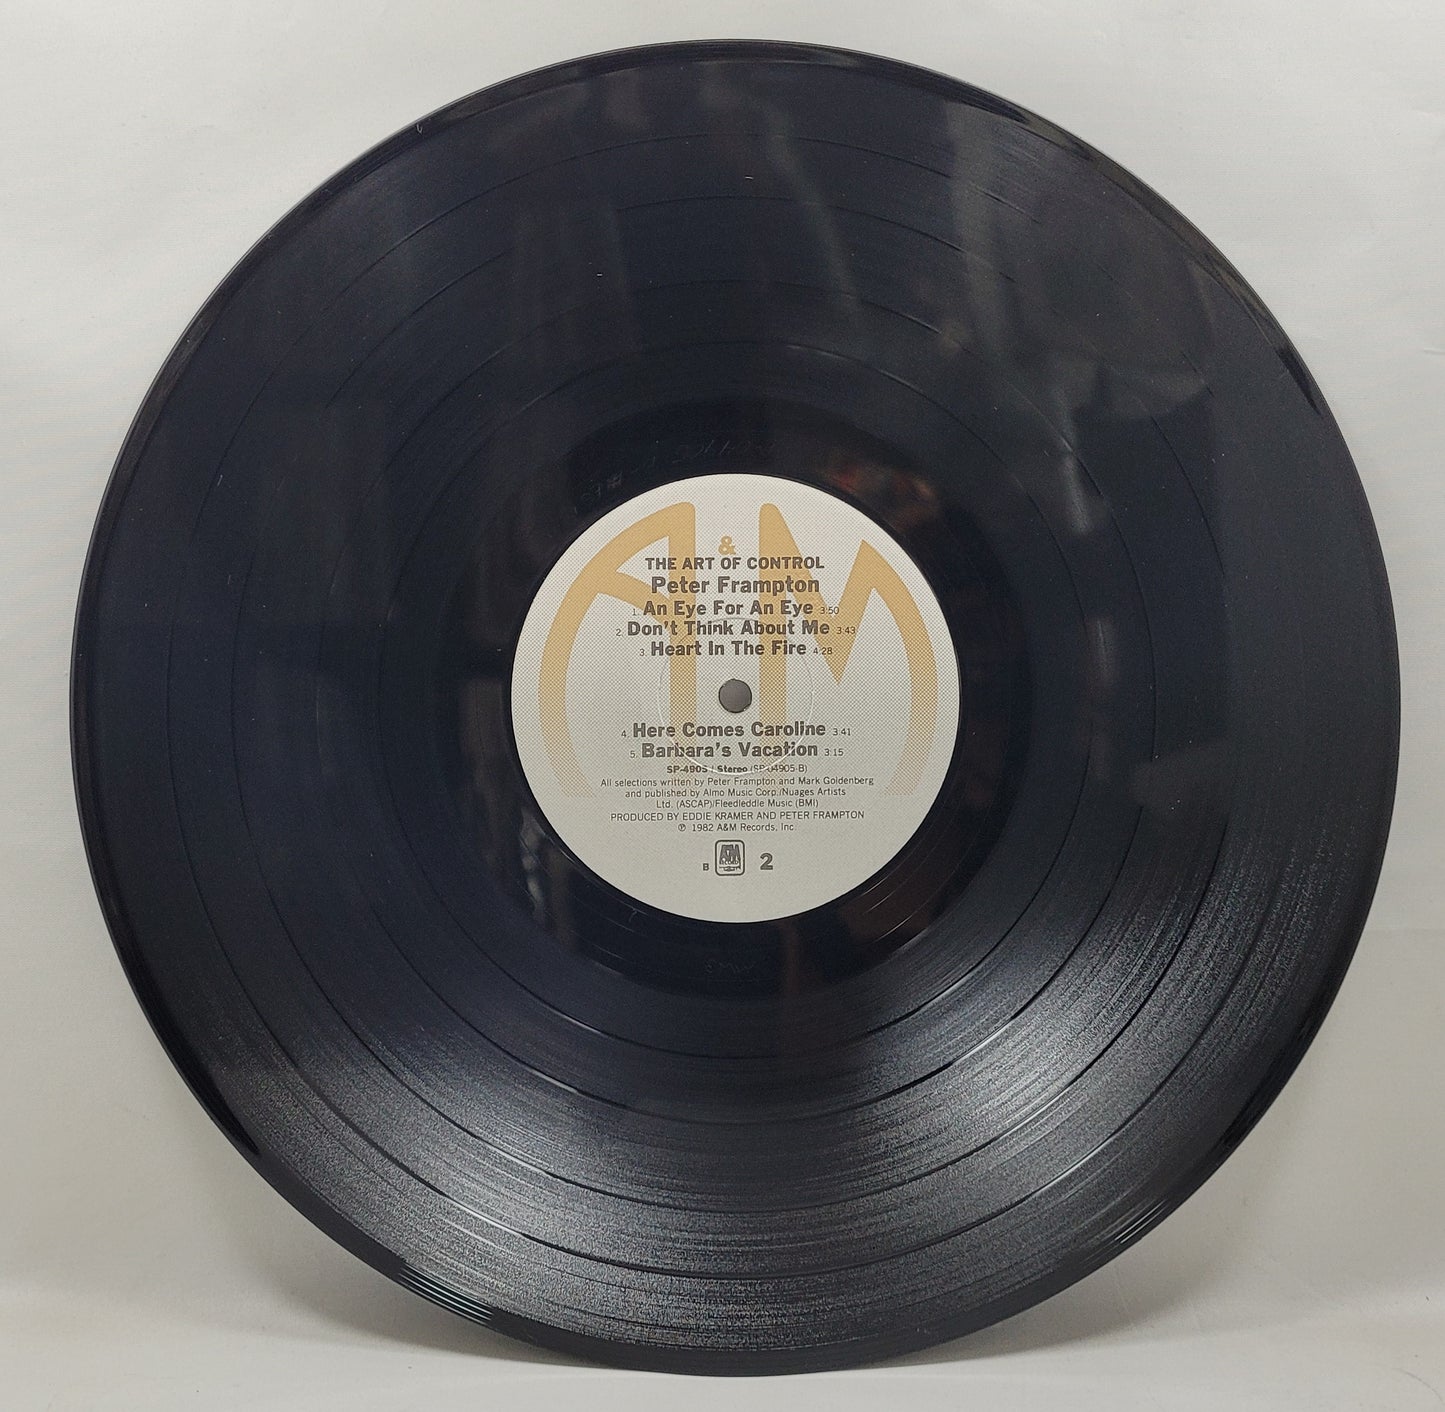 Peter Frampton - The Art of Control [1982 Used Vinyl Record LP]